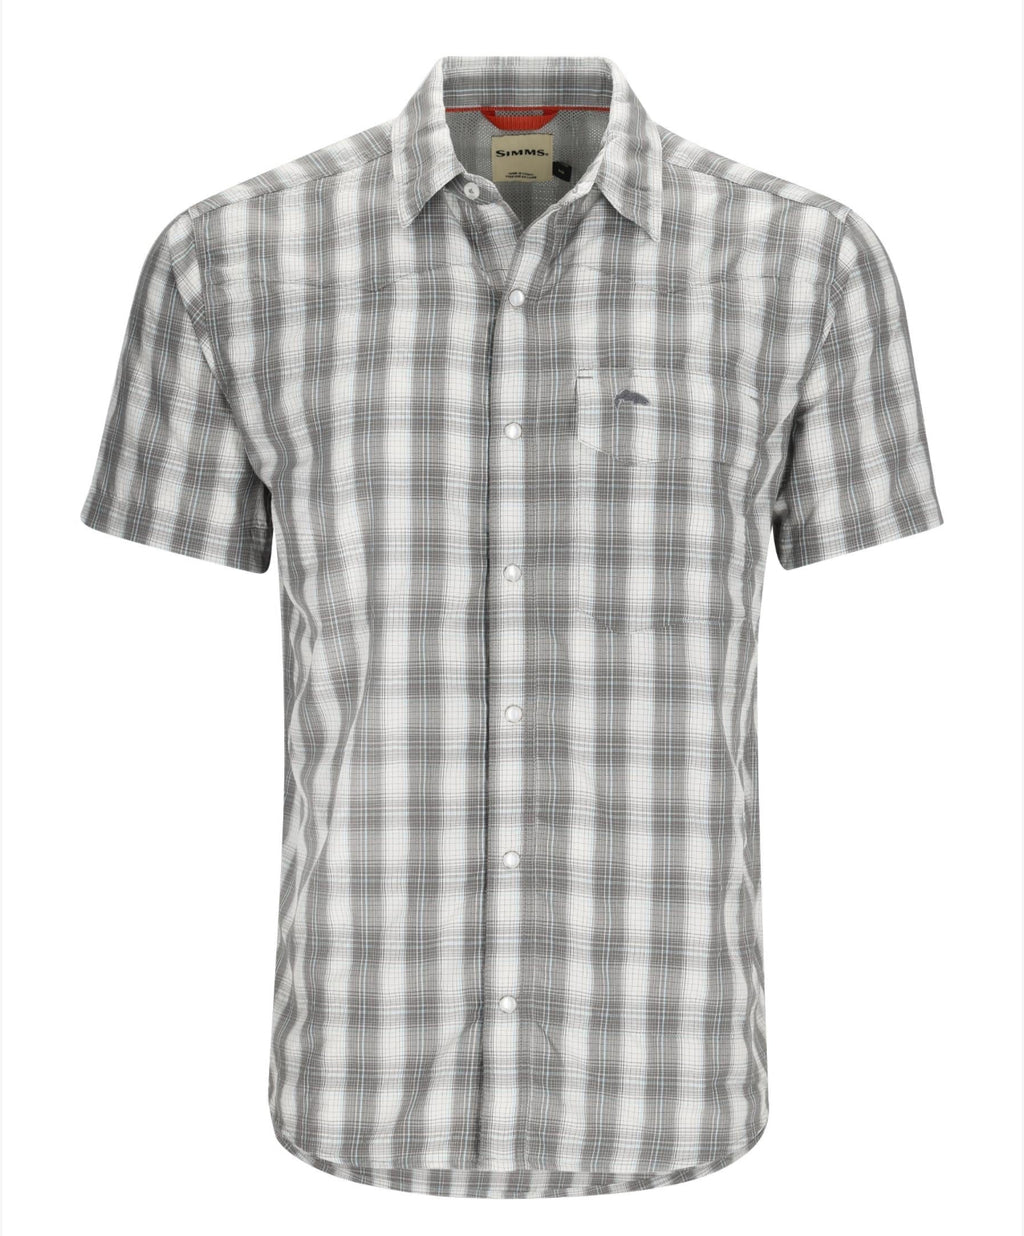 Simms Big Sky Short Sleeve Shirt - Exuma Plaid With Oyster Logo